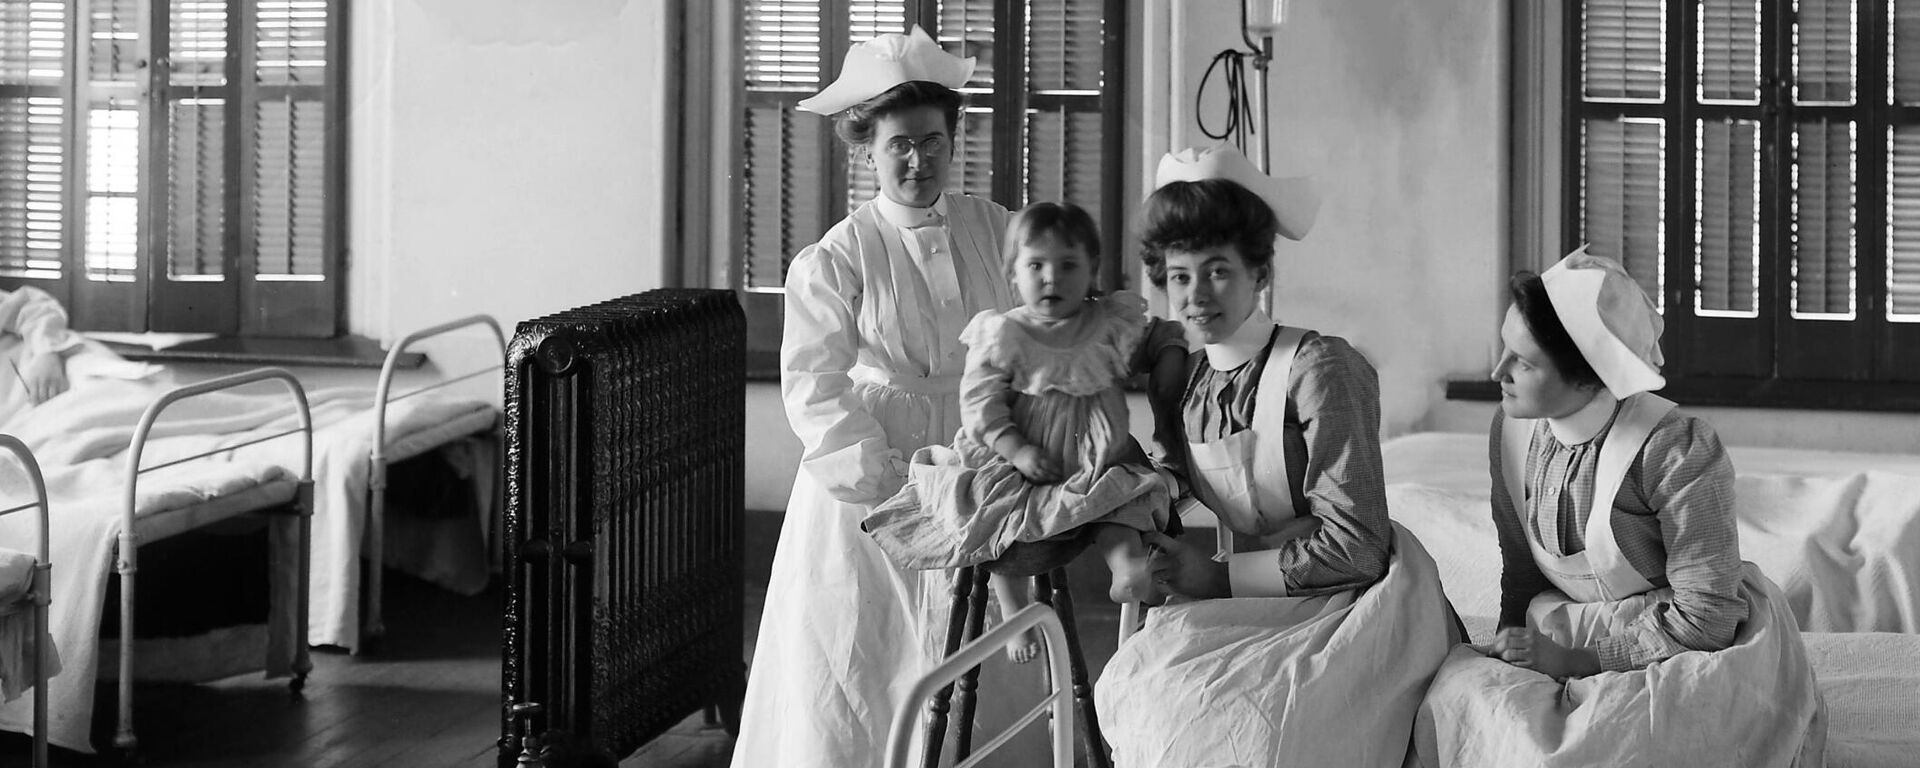 El interior del hospital St. Louis Female en 1904 - Sputnik Mundo, 1920, 04.02.2022